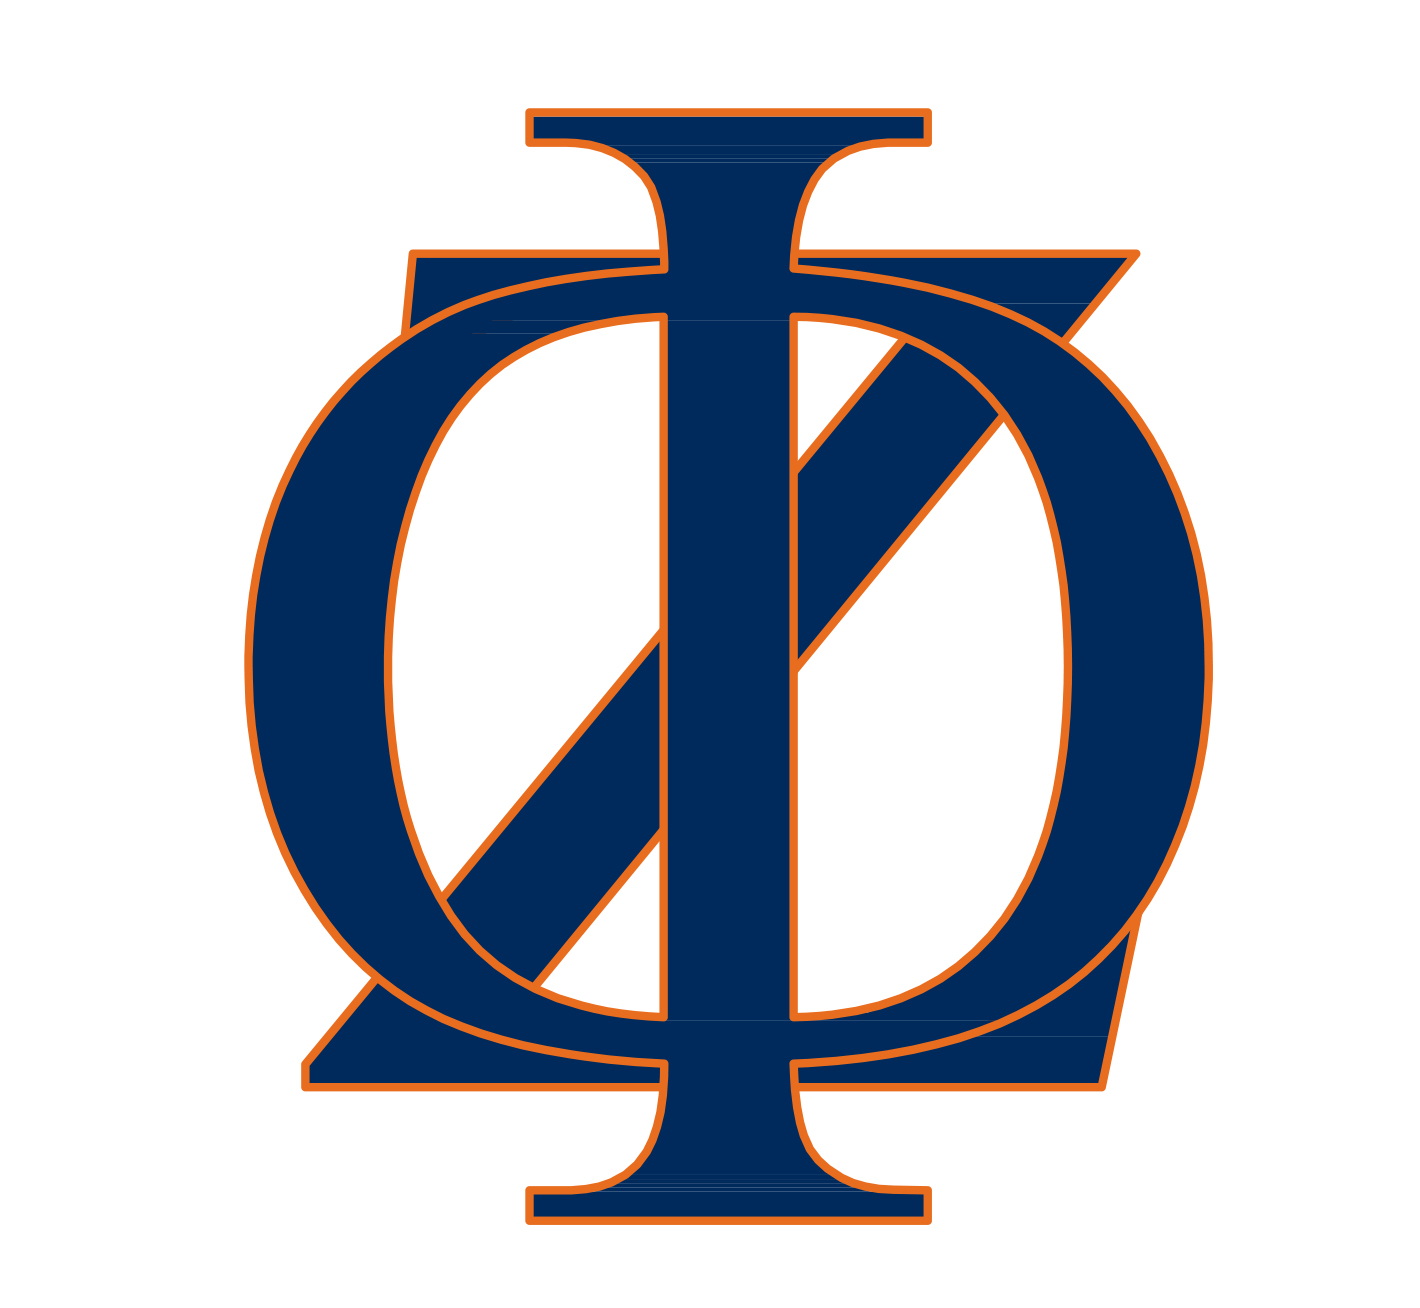 Phi Zeta logo image